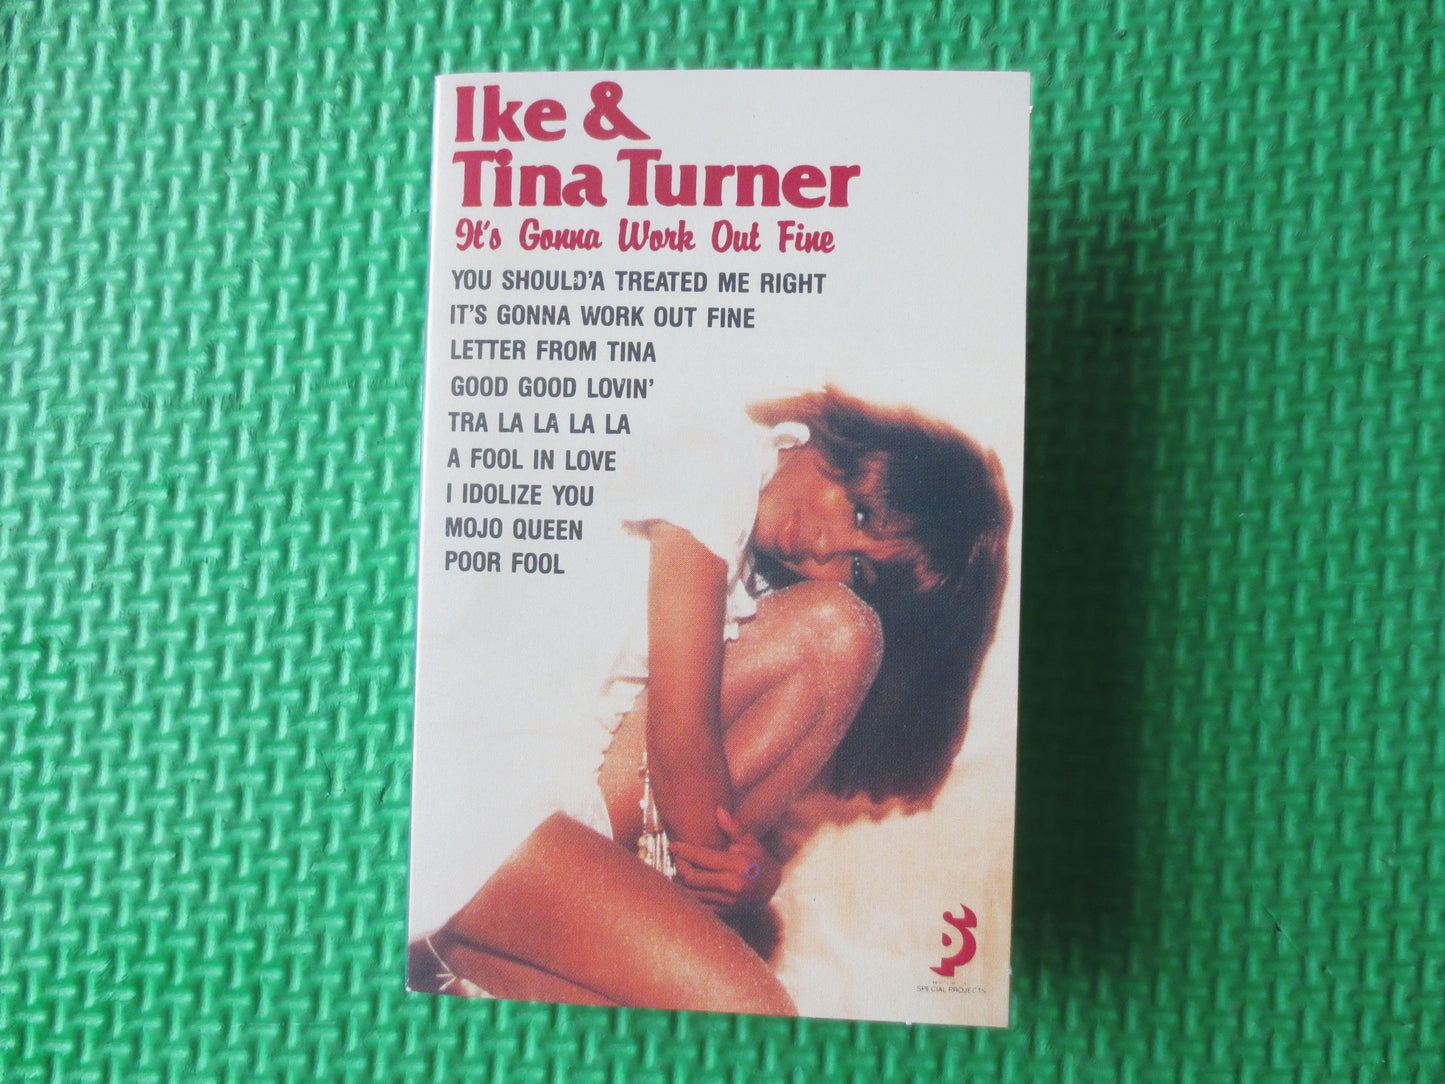 IKE and TINA TURNER, Ike Turner Tapes, Tina Turner Tapes, Tape Cassette, Pop Music Cassette, Music Tape, Tape, 1985 Cassette